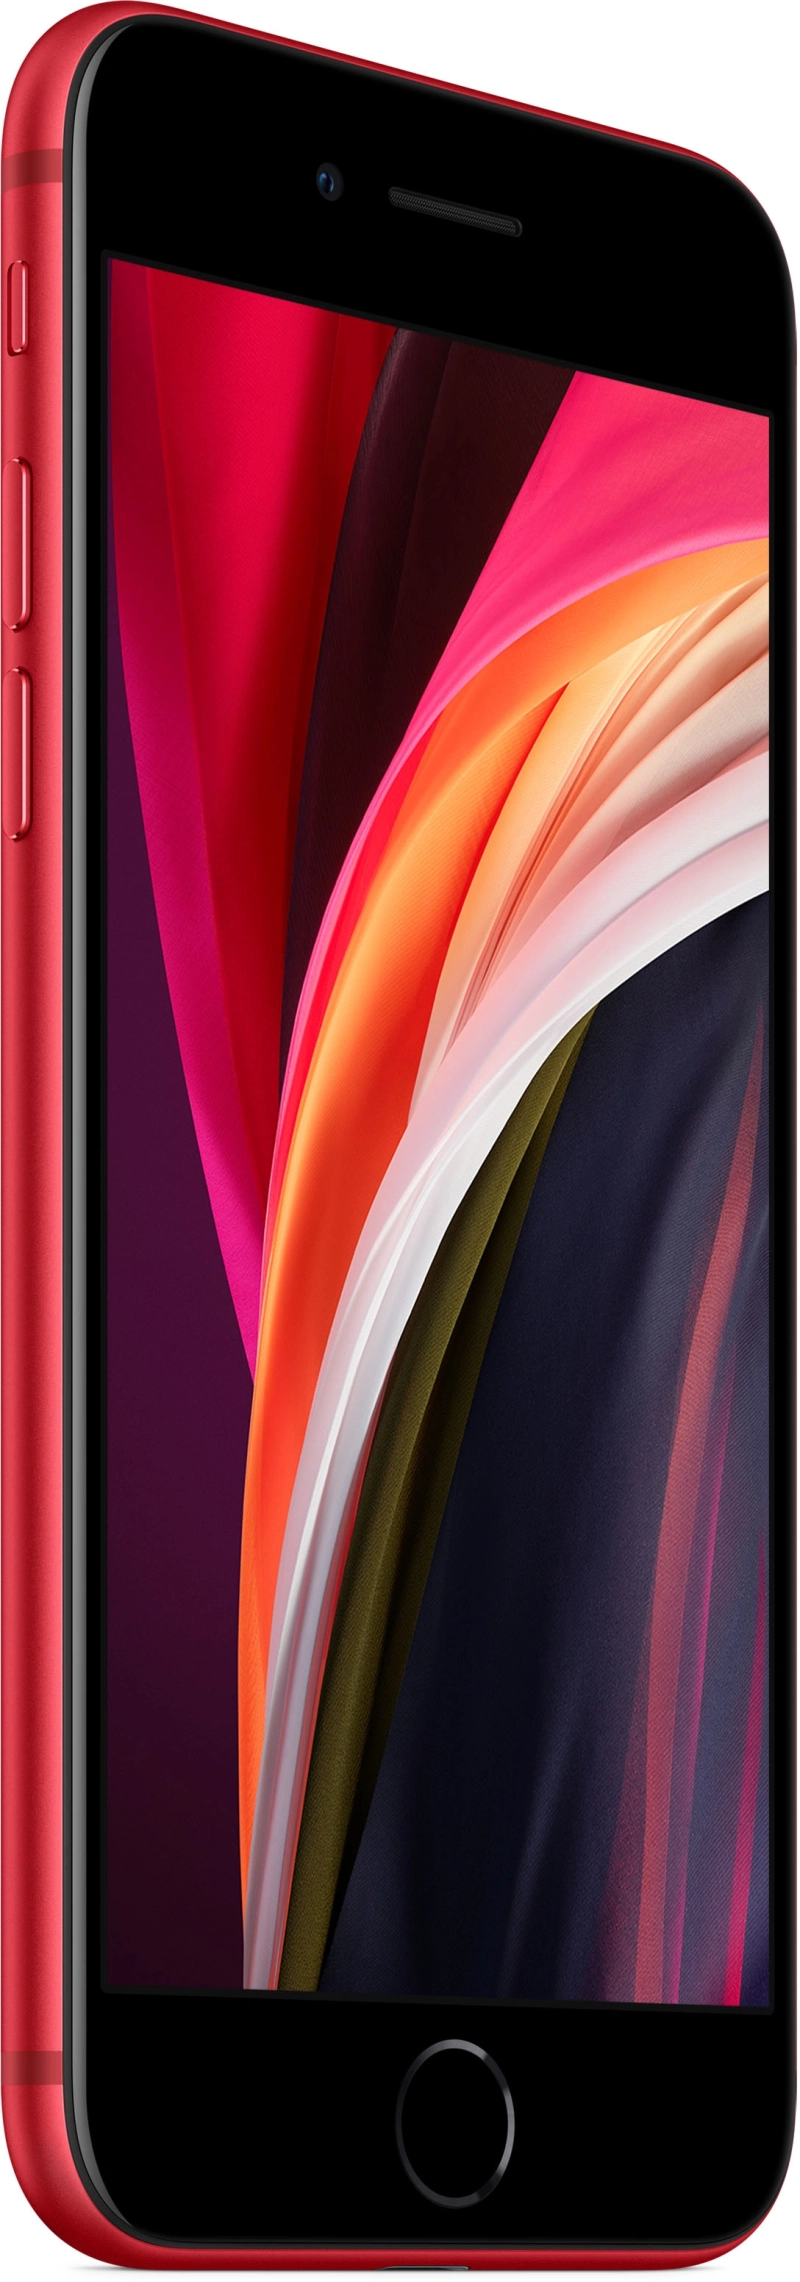 iPhone SE (2020) 64GB Red